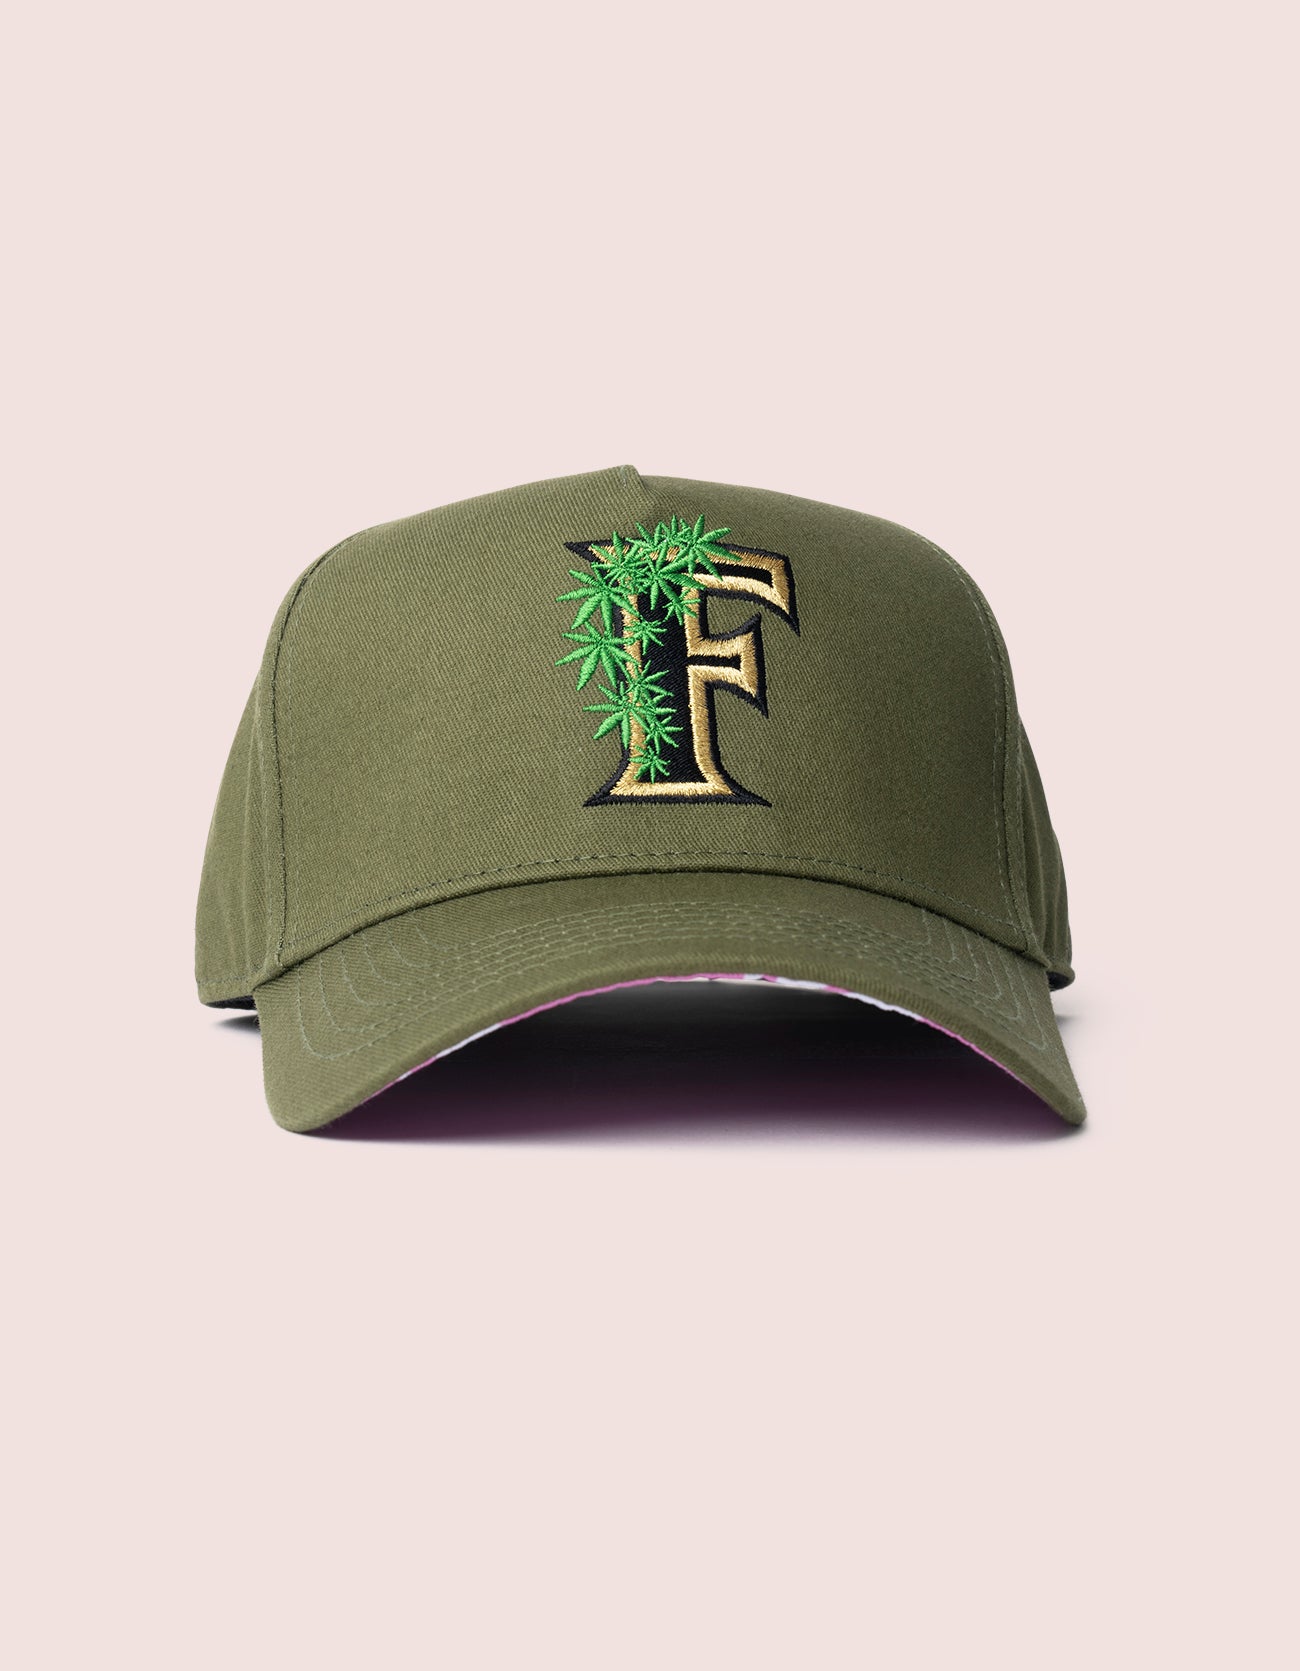 Flee Farms Green Rockstar Hat